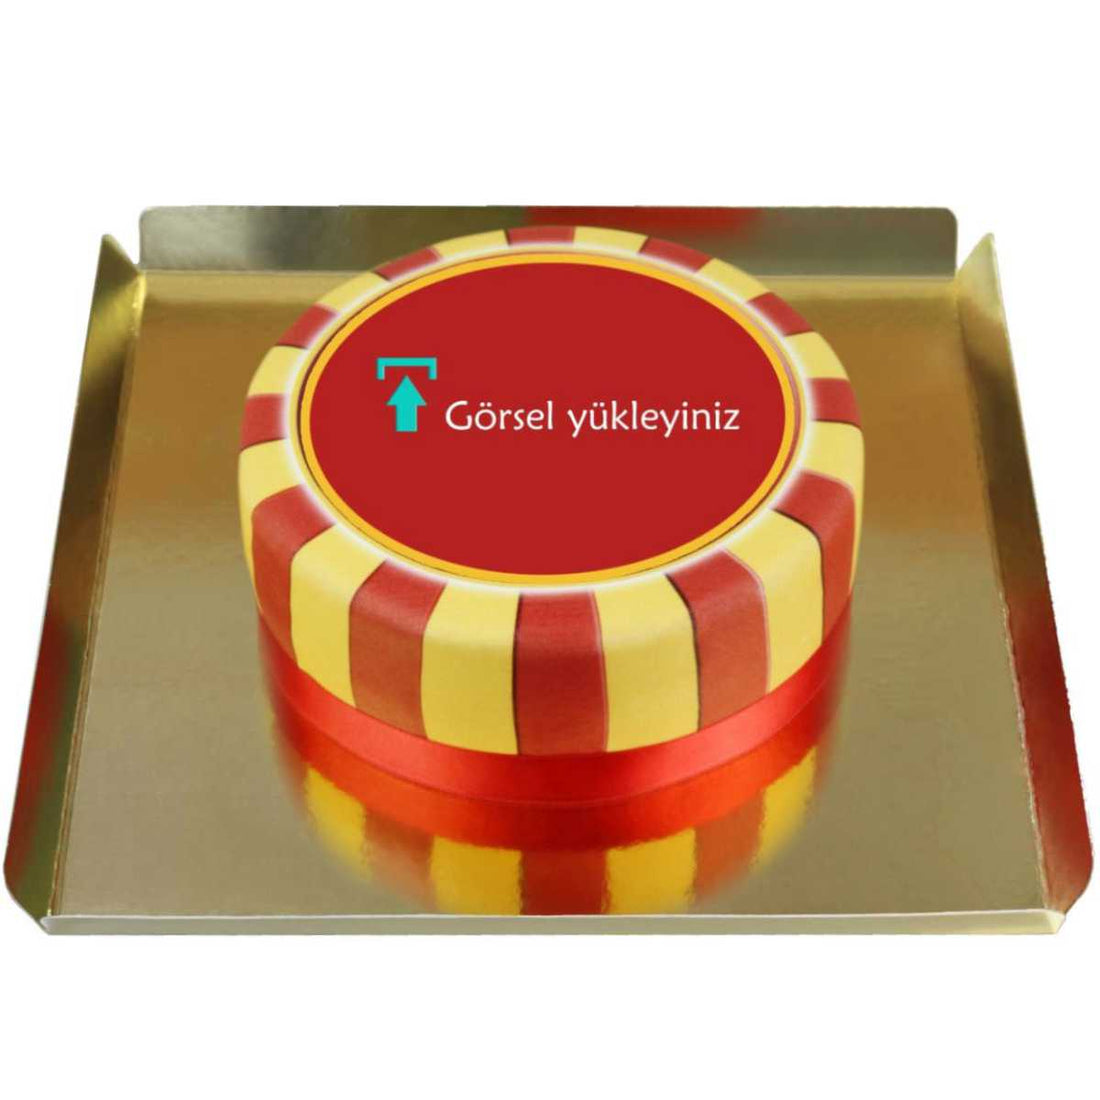 Resimli Galatasaray Taraftar Pastası